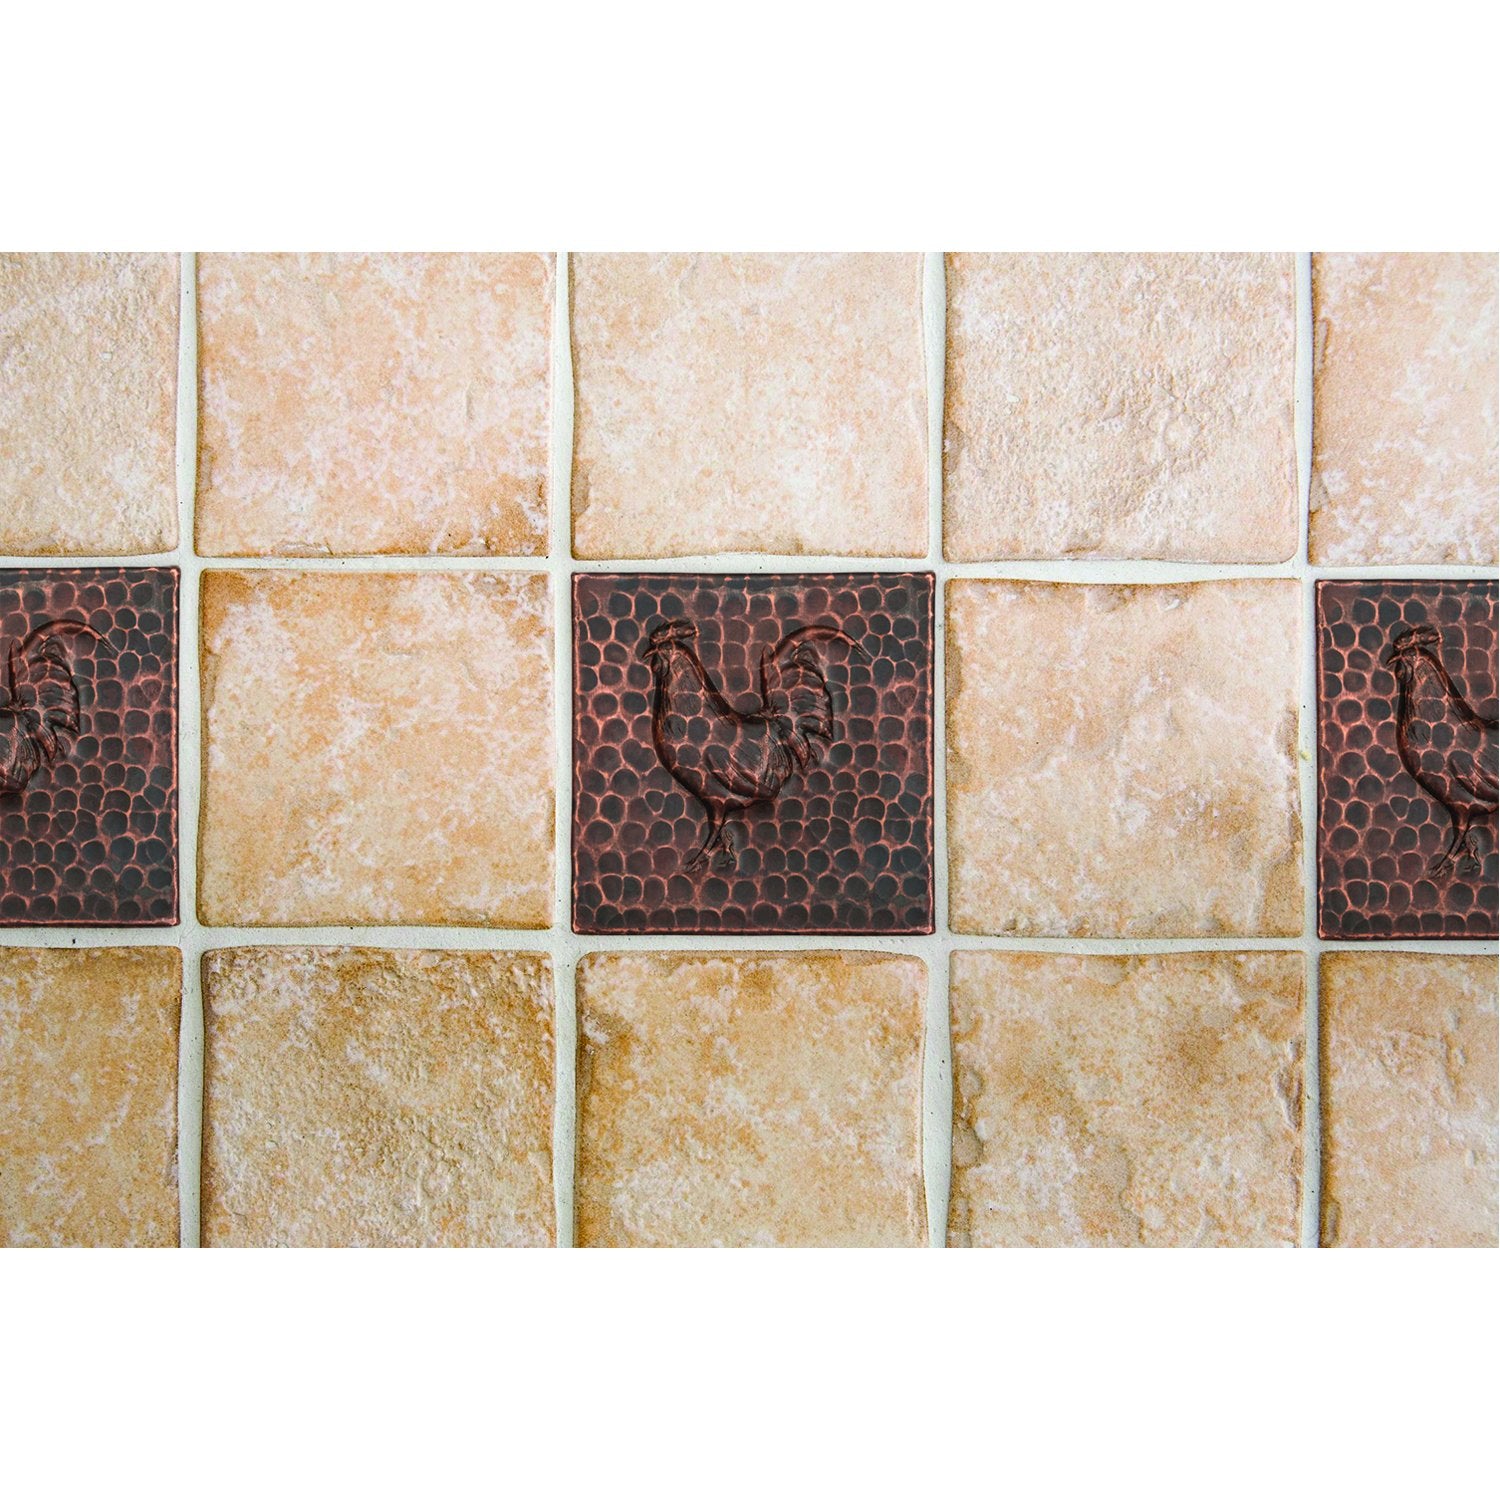 4" x 4" Hammered Copper Rooster Tile, pack of 8 Tiles